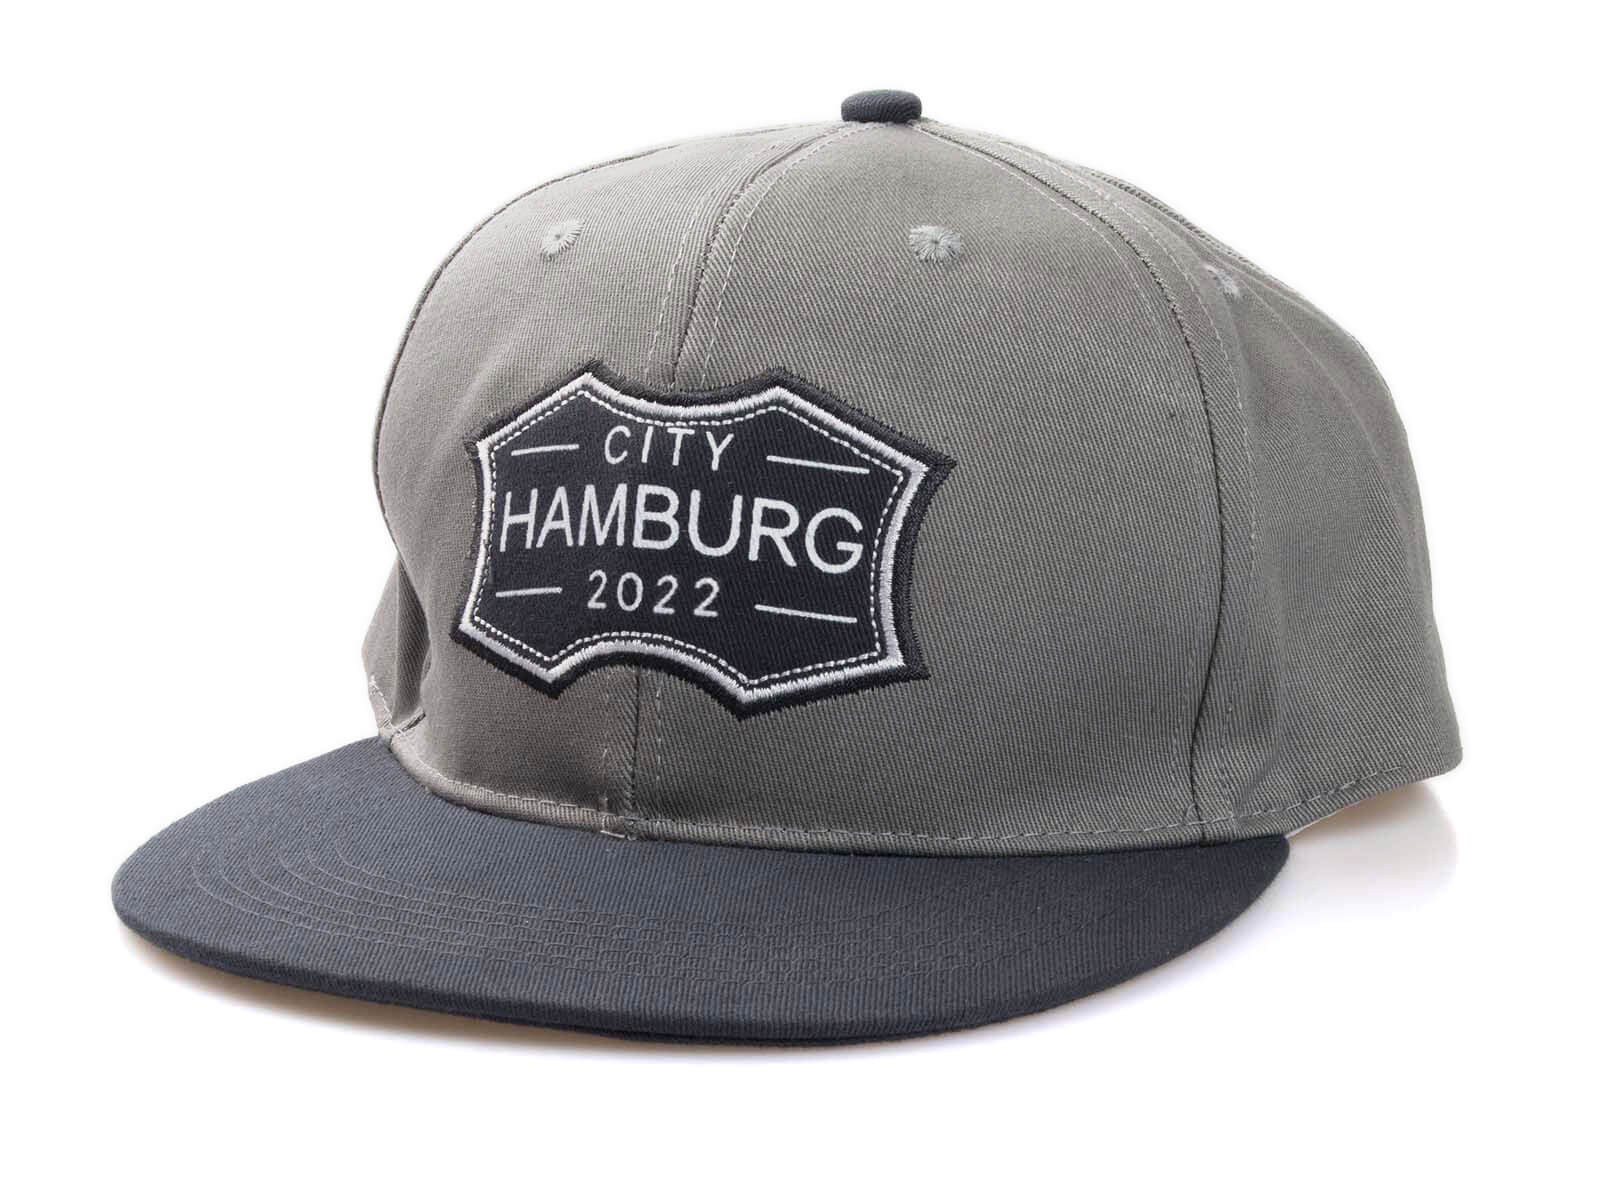 Baseball-Cap "City Hamburg 2022" - grau